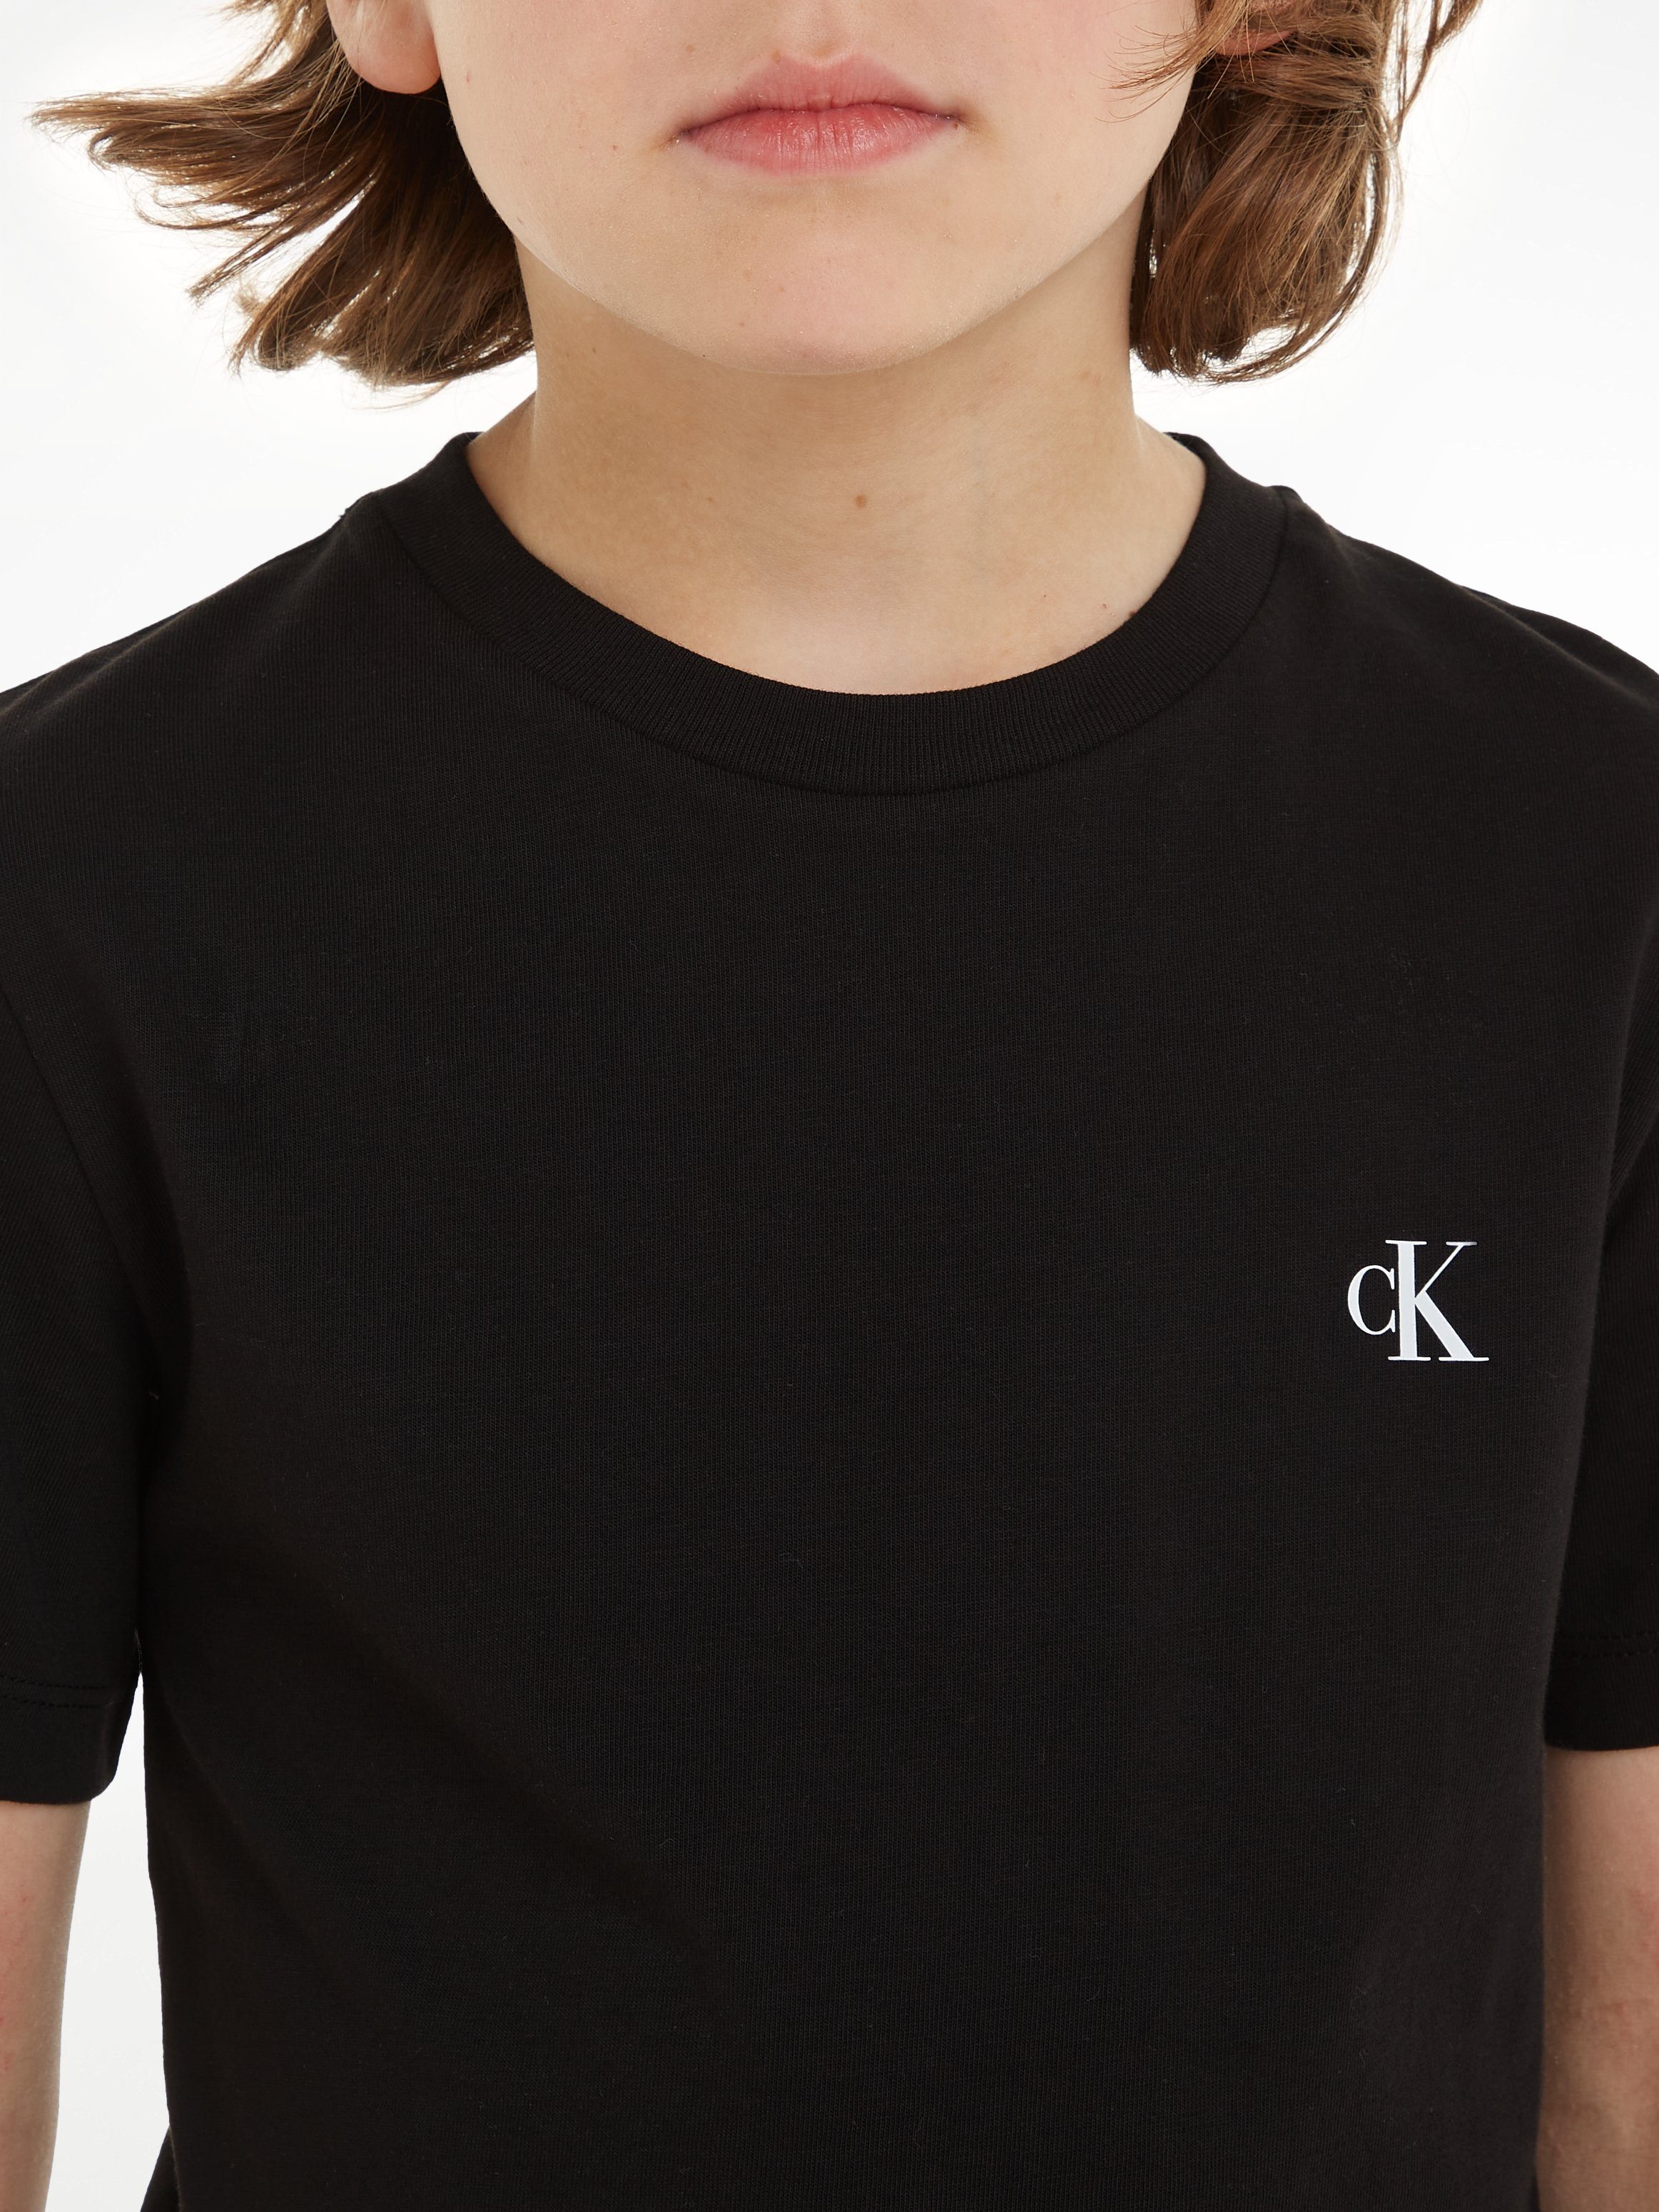 TOP Ck mit MONOGRAM Black T-Shirt 2-PACK Klein Jeans Keepsake Blue Logodruck / Calvin